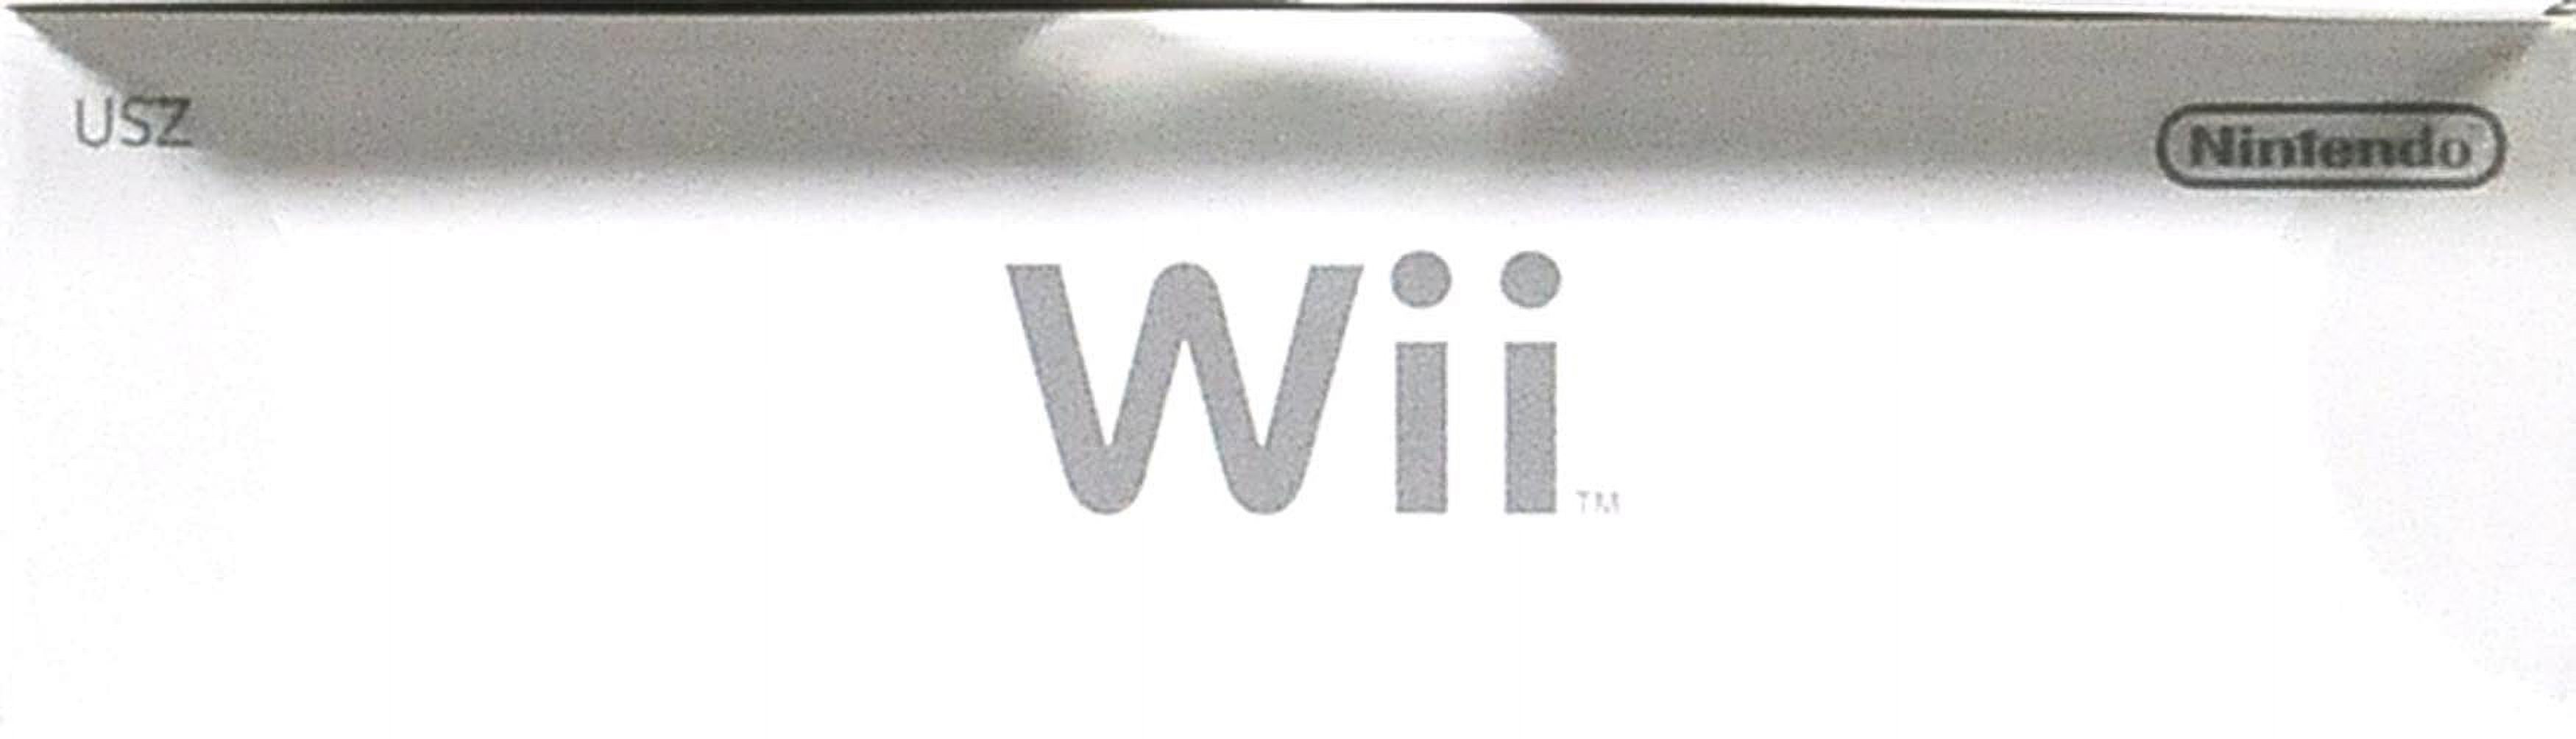 Wheel Controller for Nintendo Wii, White, RVLAHA, 00045496890216 - image 3 of 4